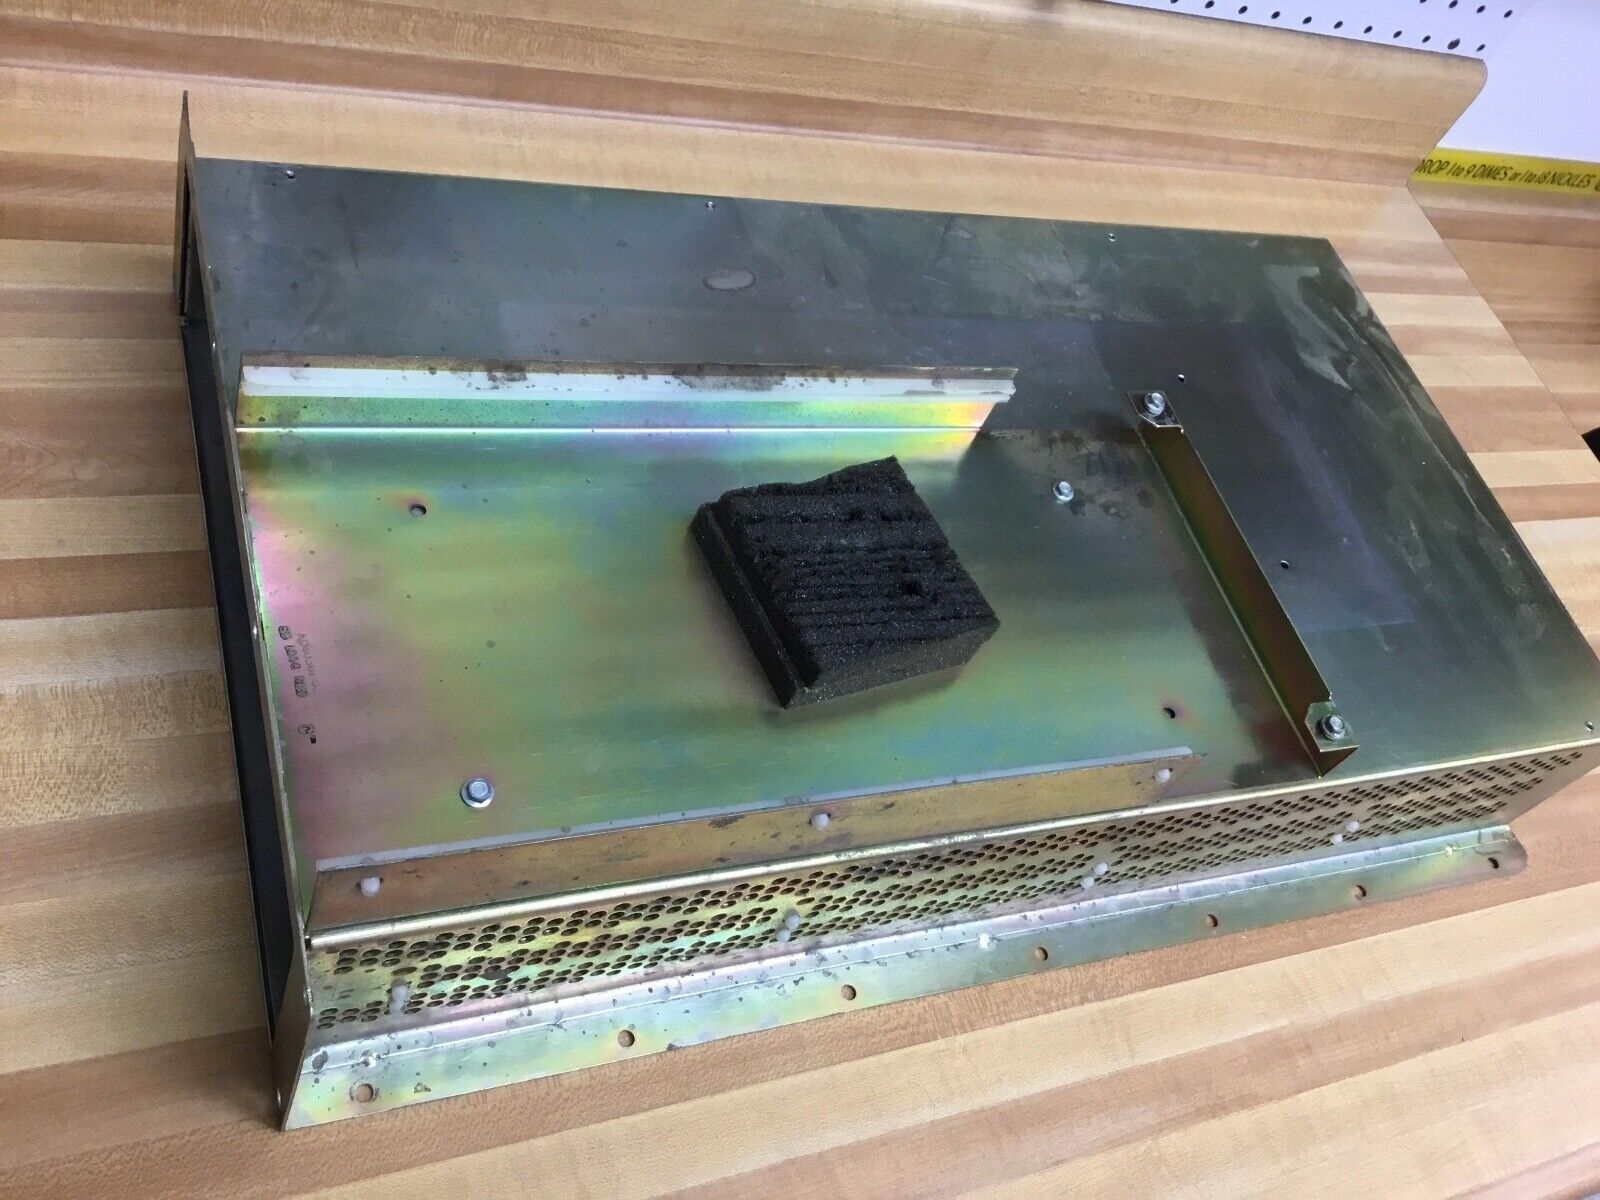 Atari Star Wars arcade CPU and audio regulator steel case